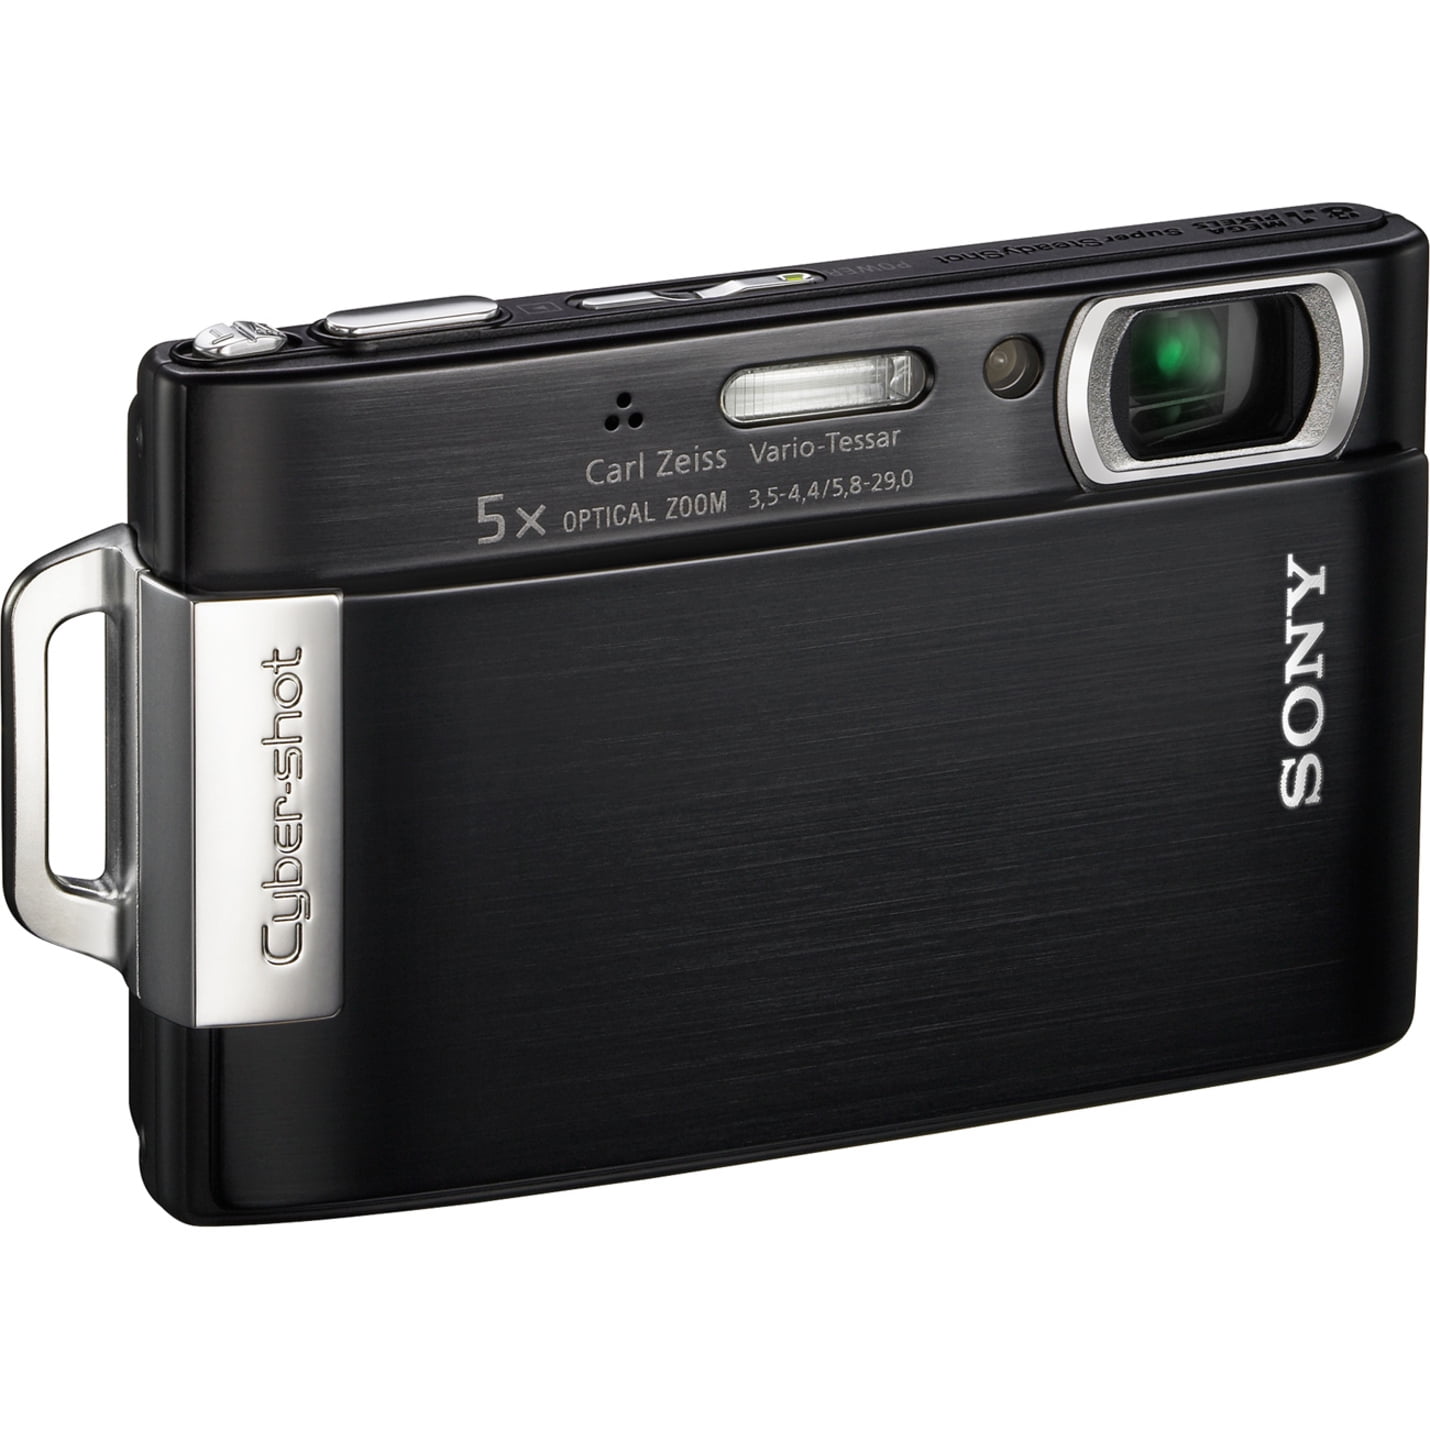 Sony Cyber-shot DSC-T200 8.1 Megapixel Compact Camera, Black - Walmart.com